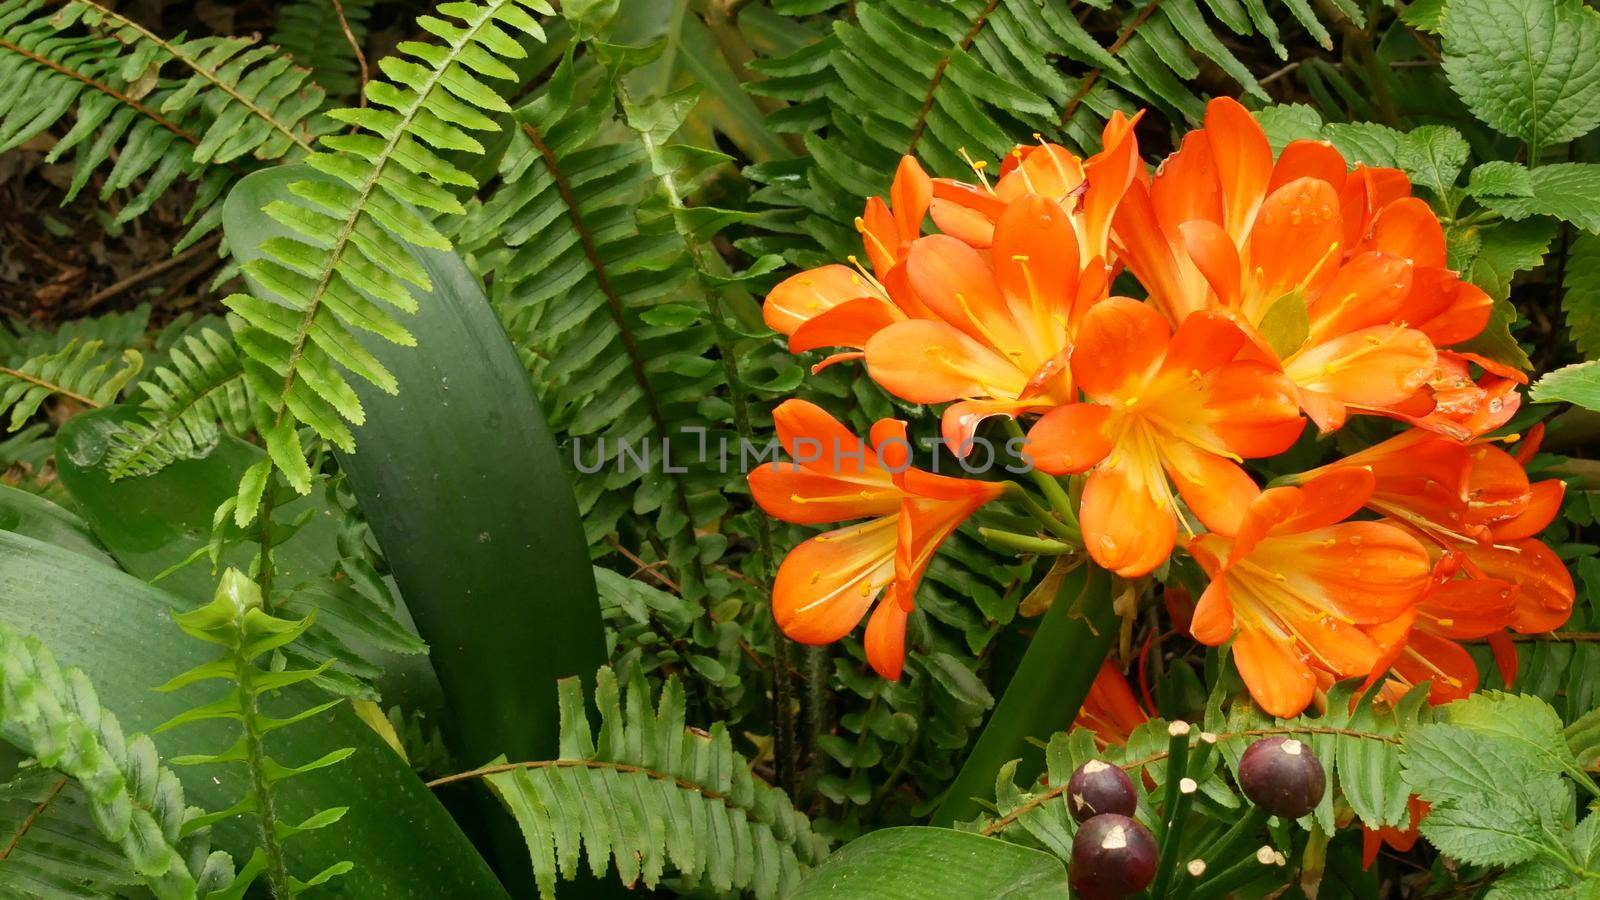 Natal bush kafir lily flower, California, USA. Clivia miniata orange flamboyant exotic fiery vibrant botanical bloom. Tropical jungle rainforest atmosphere. Natural garden vivid fresh juicy greenery by DogoraSun